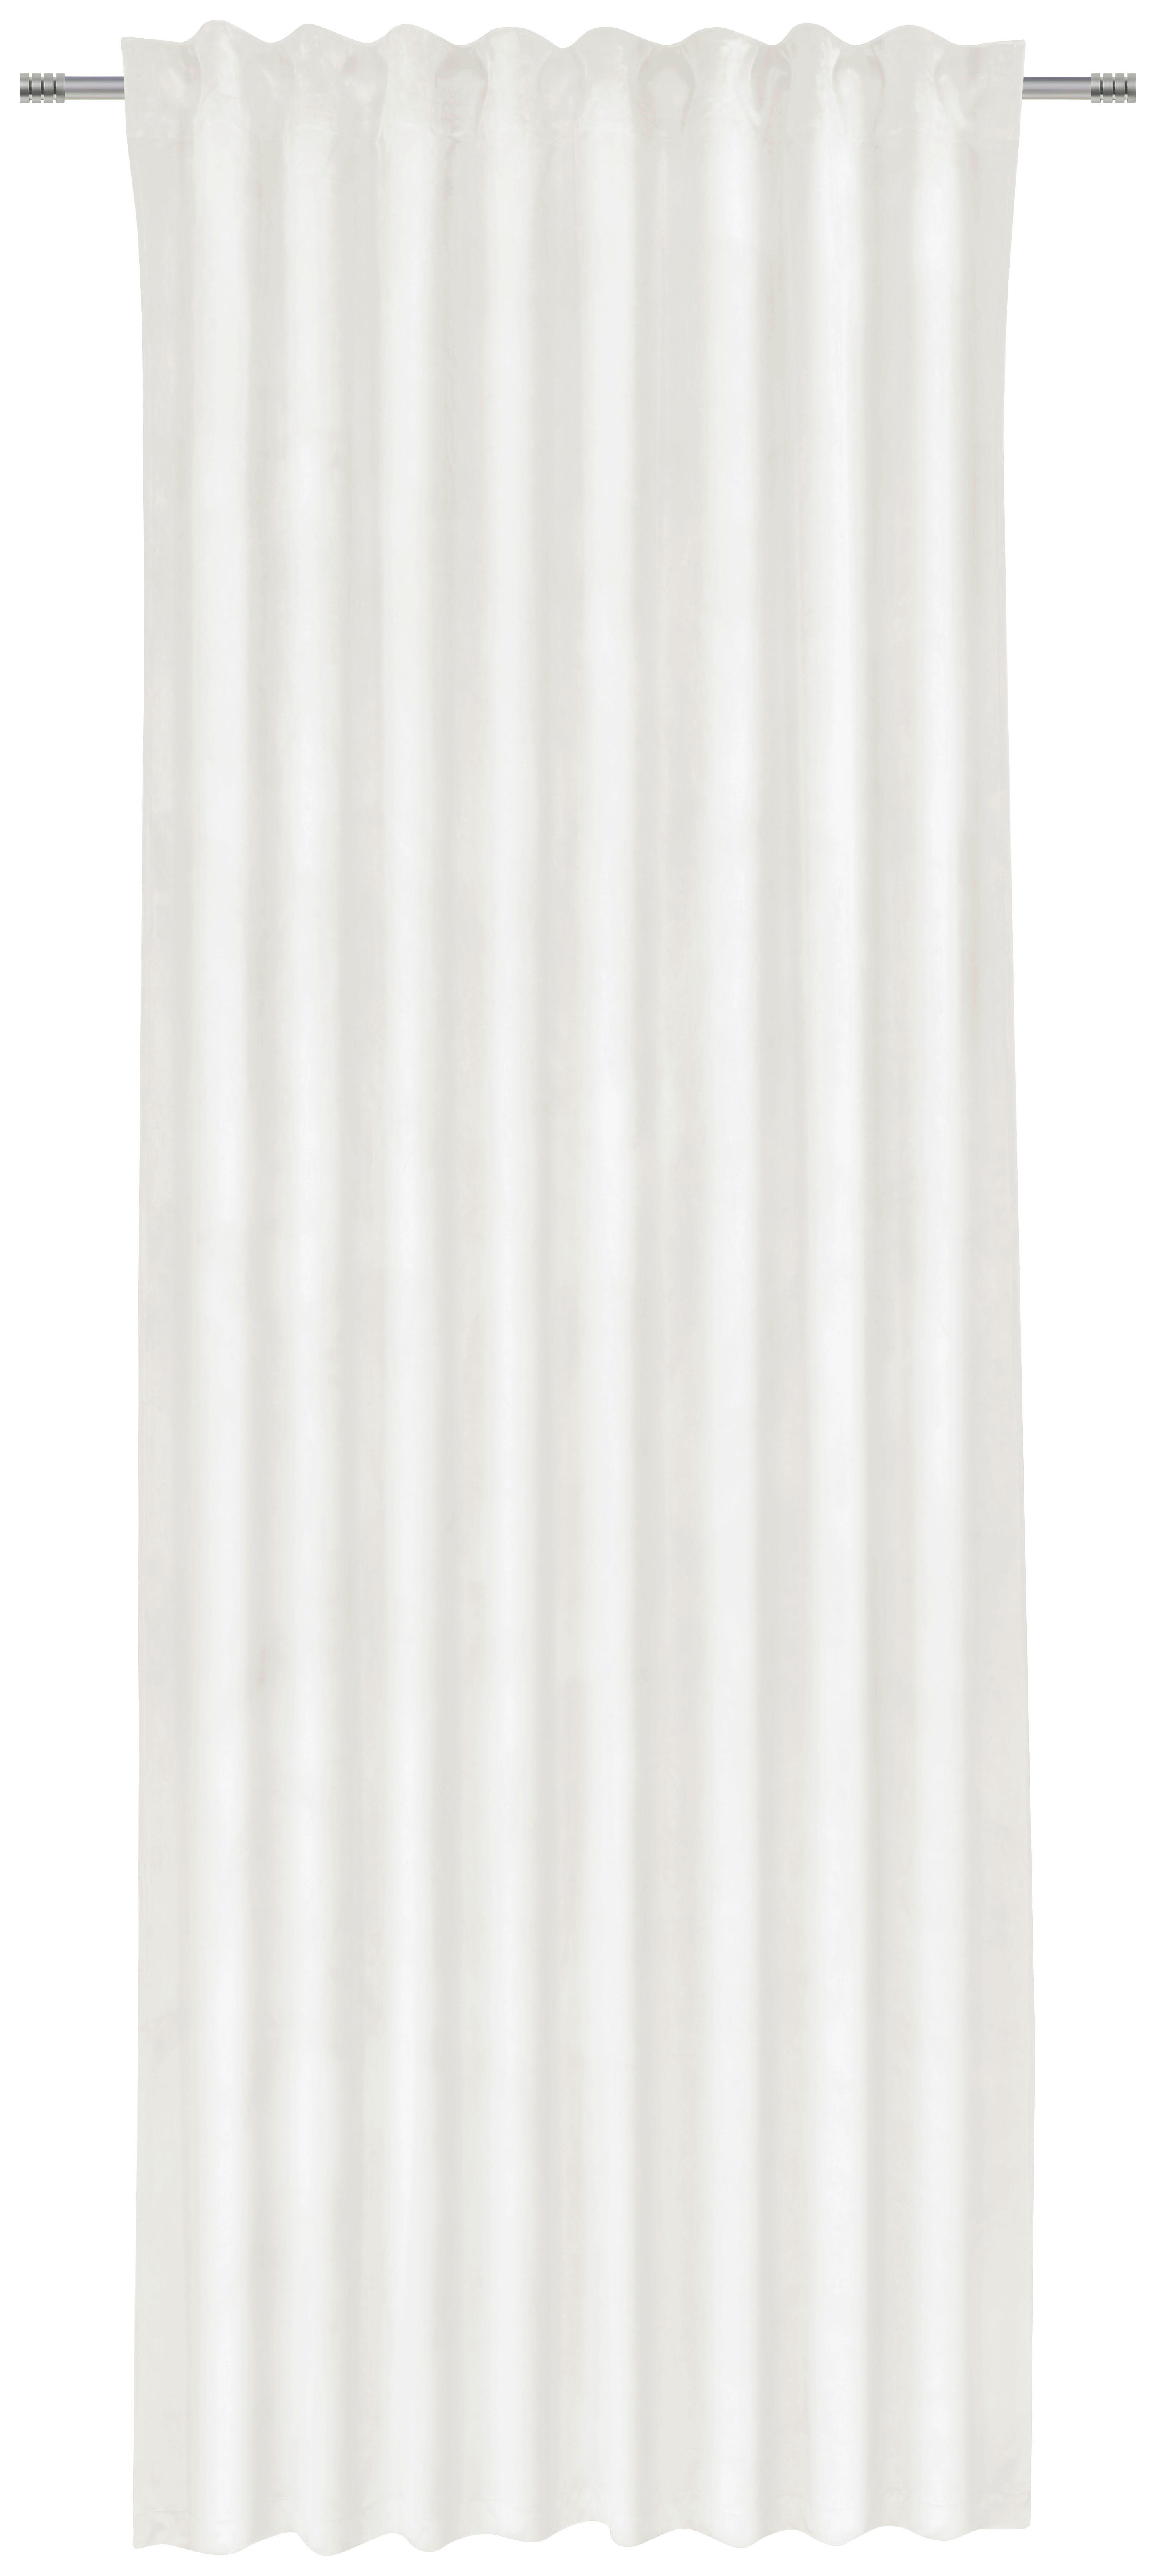 FERTIGVORHANG blickdicht  - Creme, Konventionell, Textil (135/255cm) - Esposa